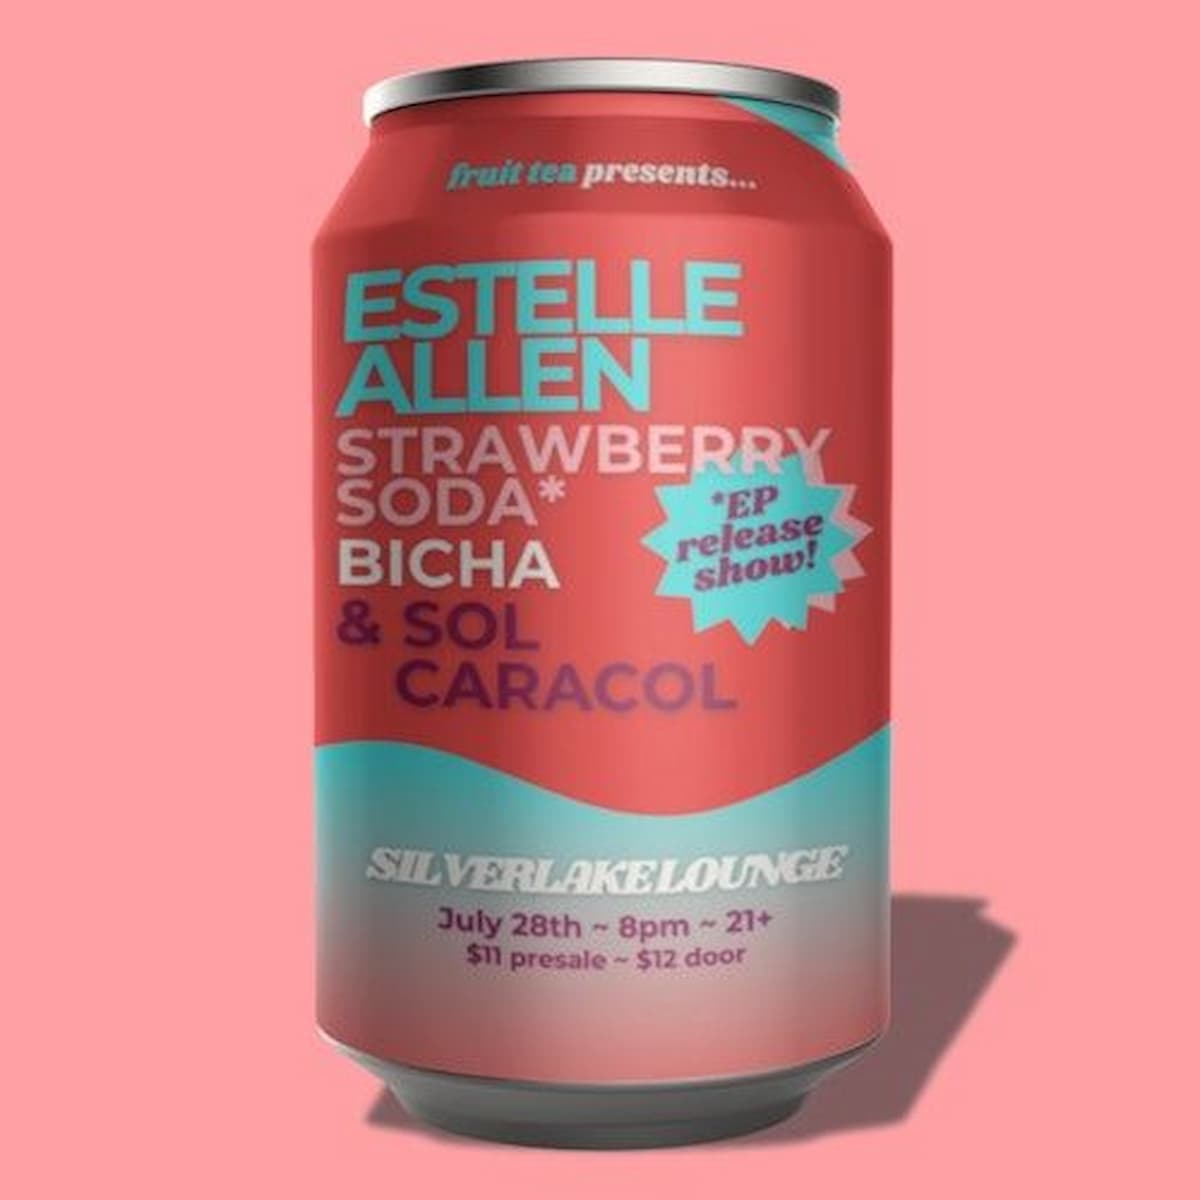 Estelle Allen / Strawberry Soda / Bicha